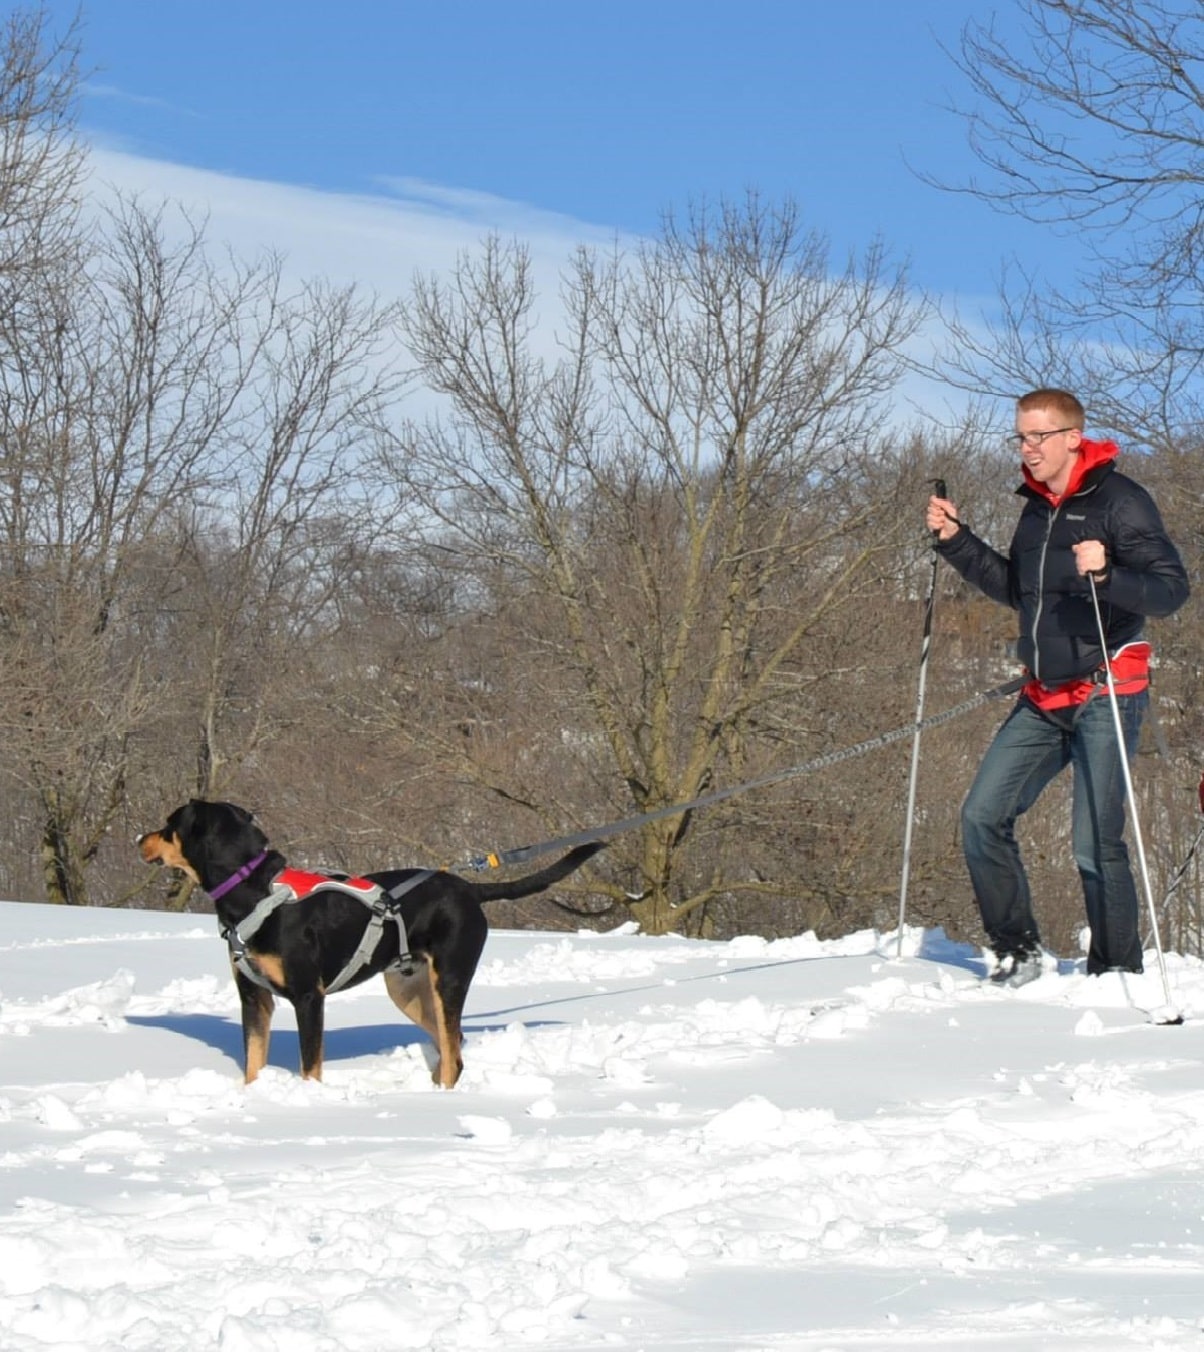 Zachery Gries and dog ski-joring